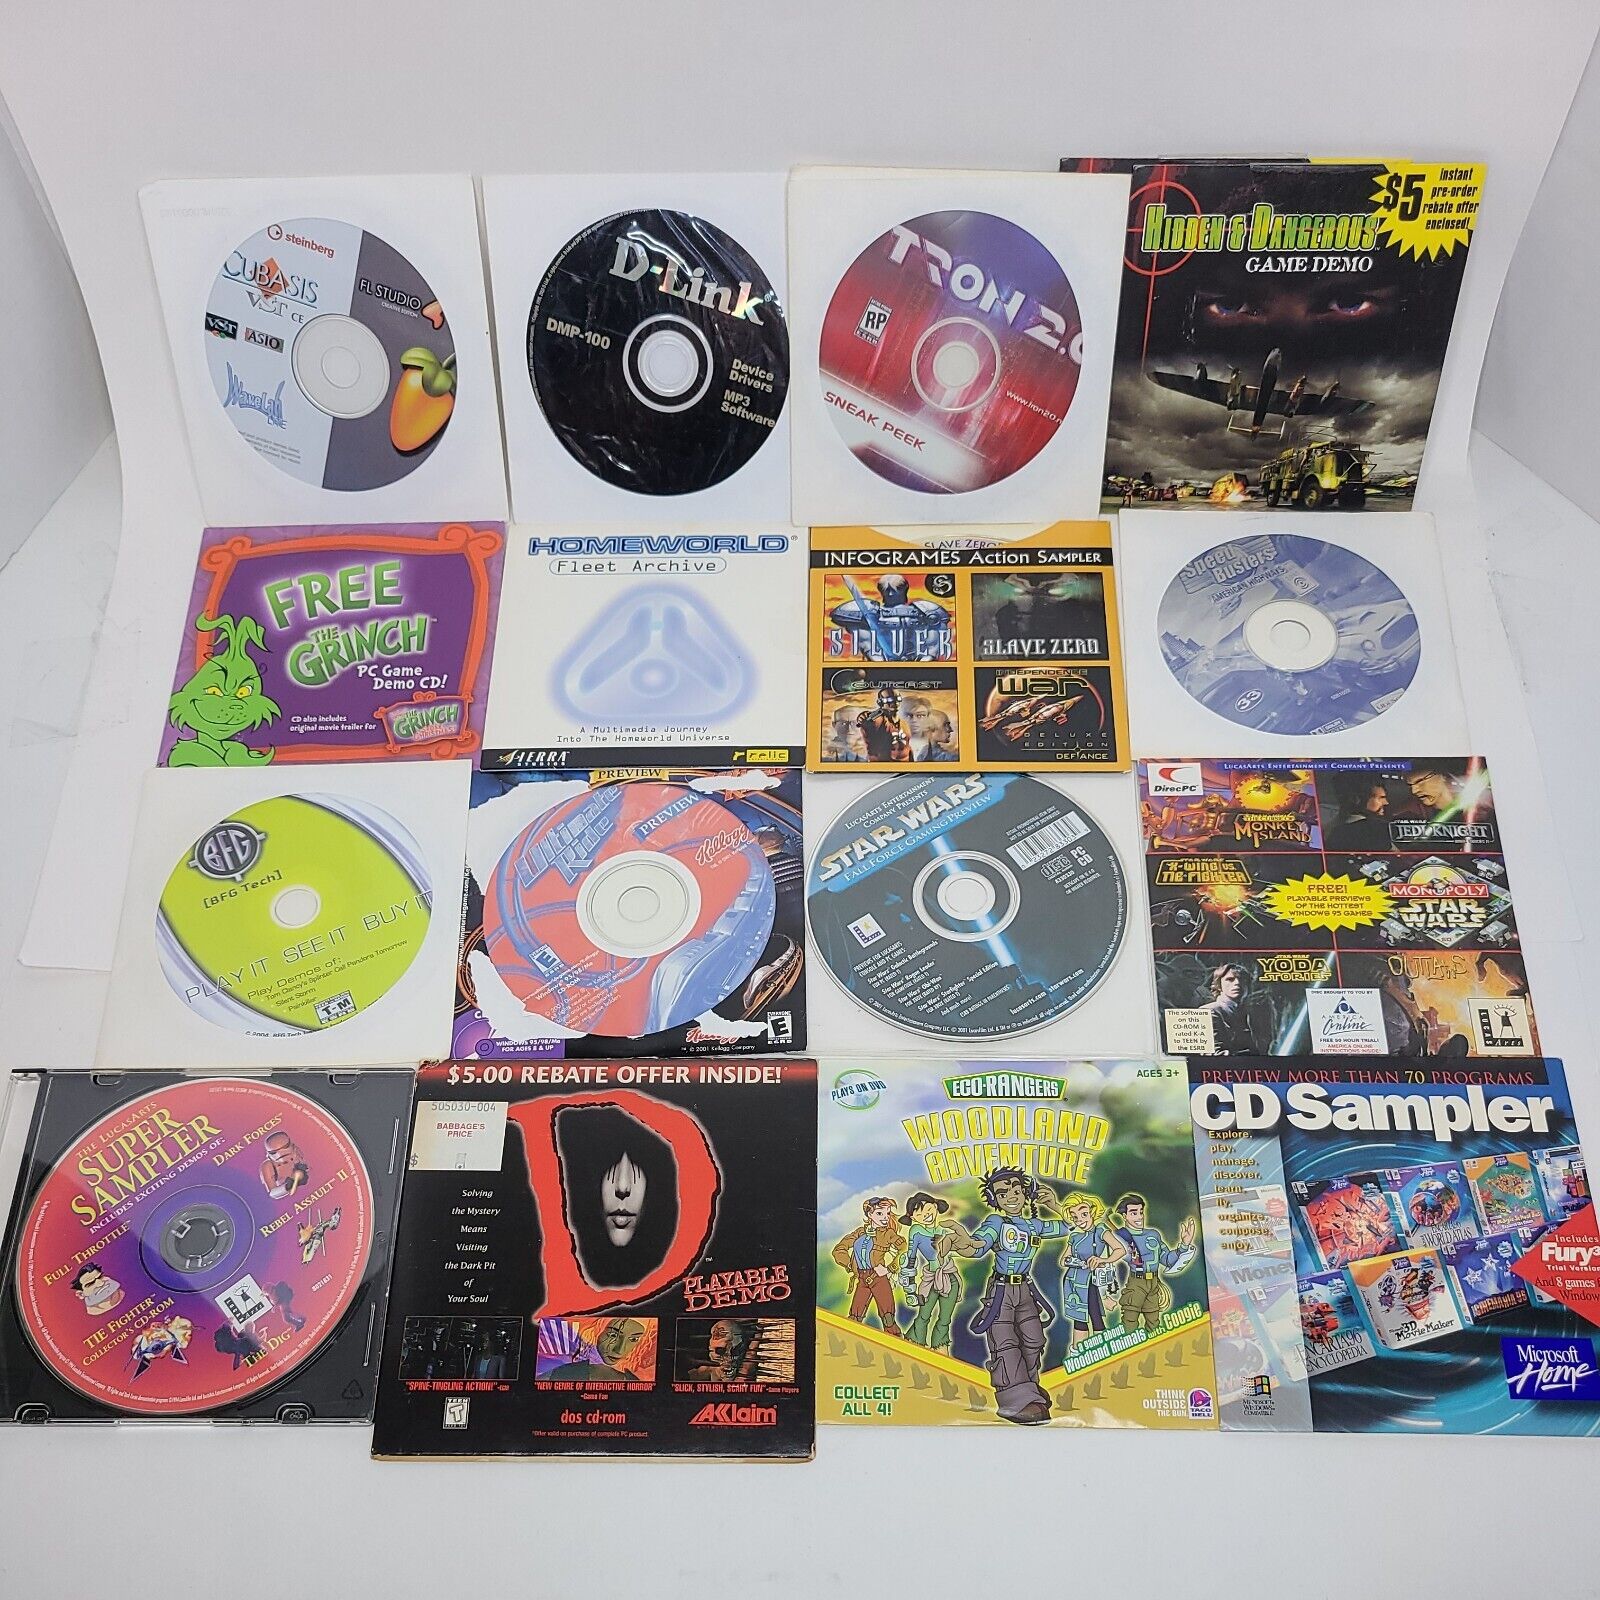 Lot of 17 PC CD-ROM Sampler/Demo/Software Disks 